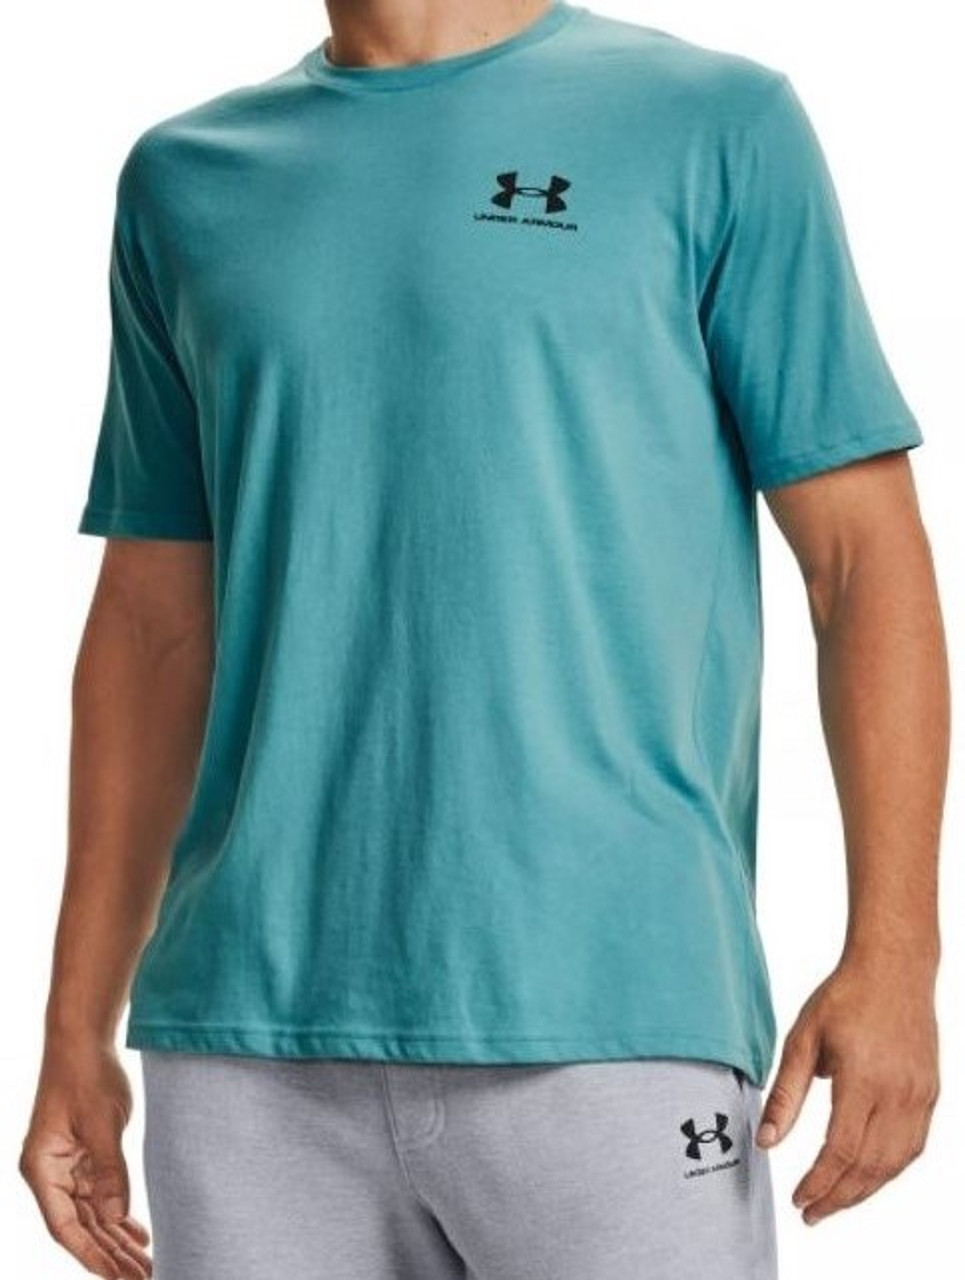 Under Armour Men's UA Sportstyle Left Chest Short Sleeve T-Shirt - 1326799  - Bereli Inc.